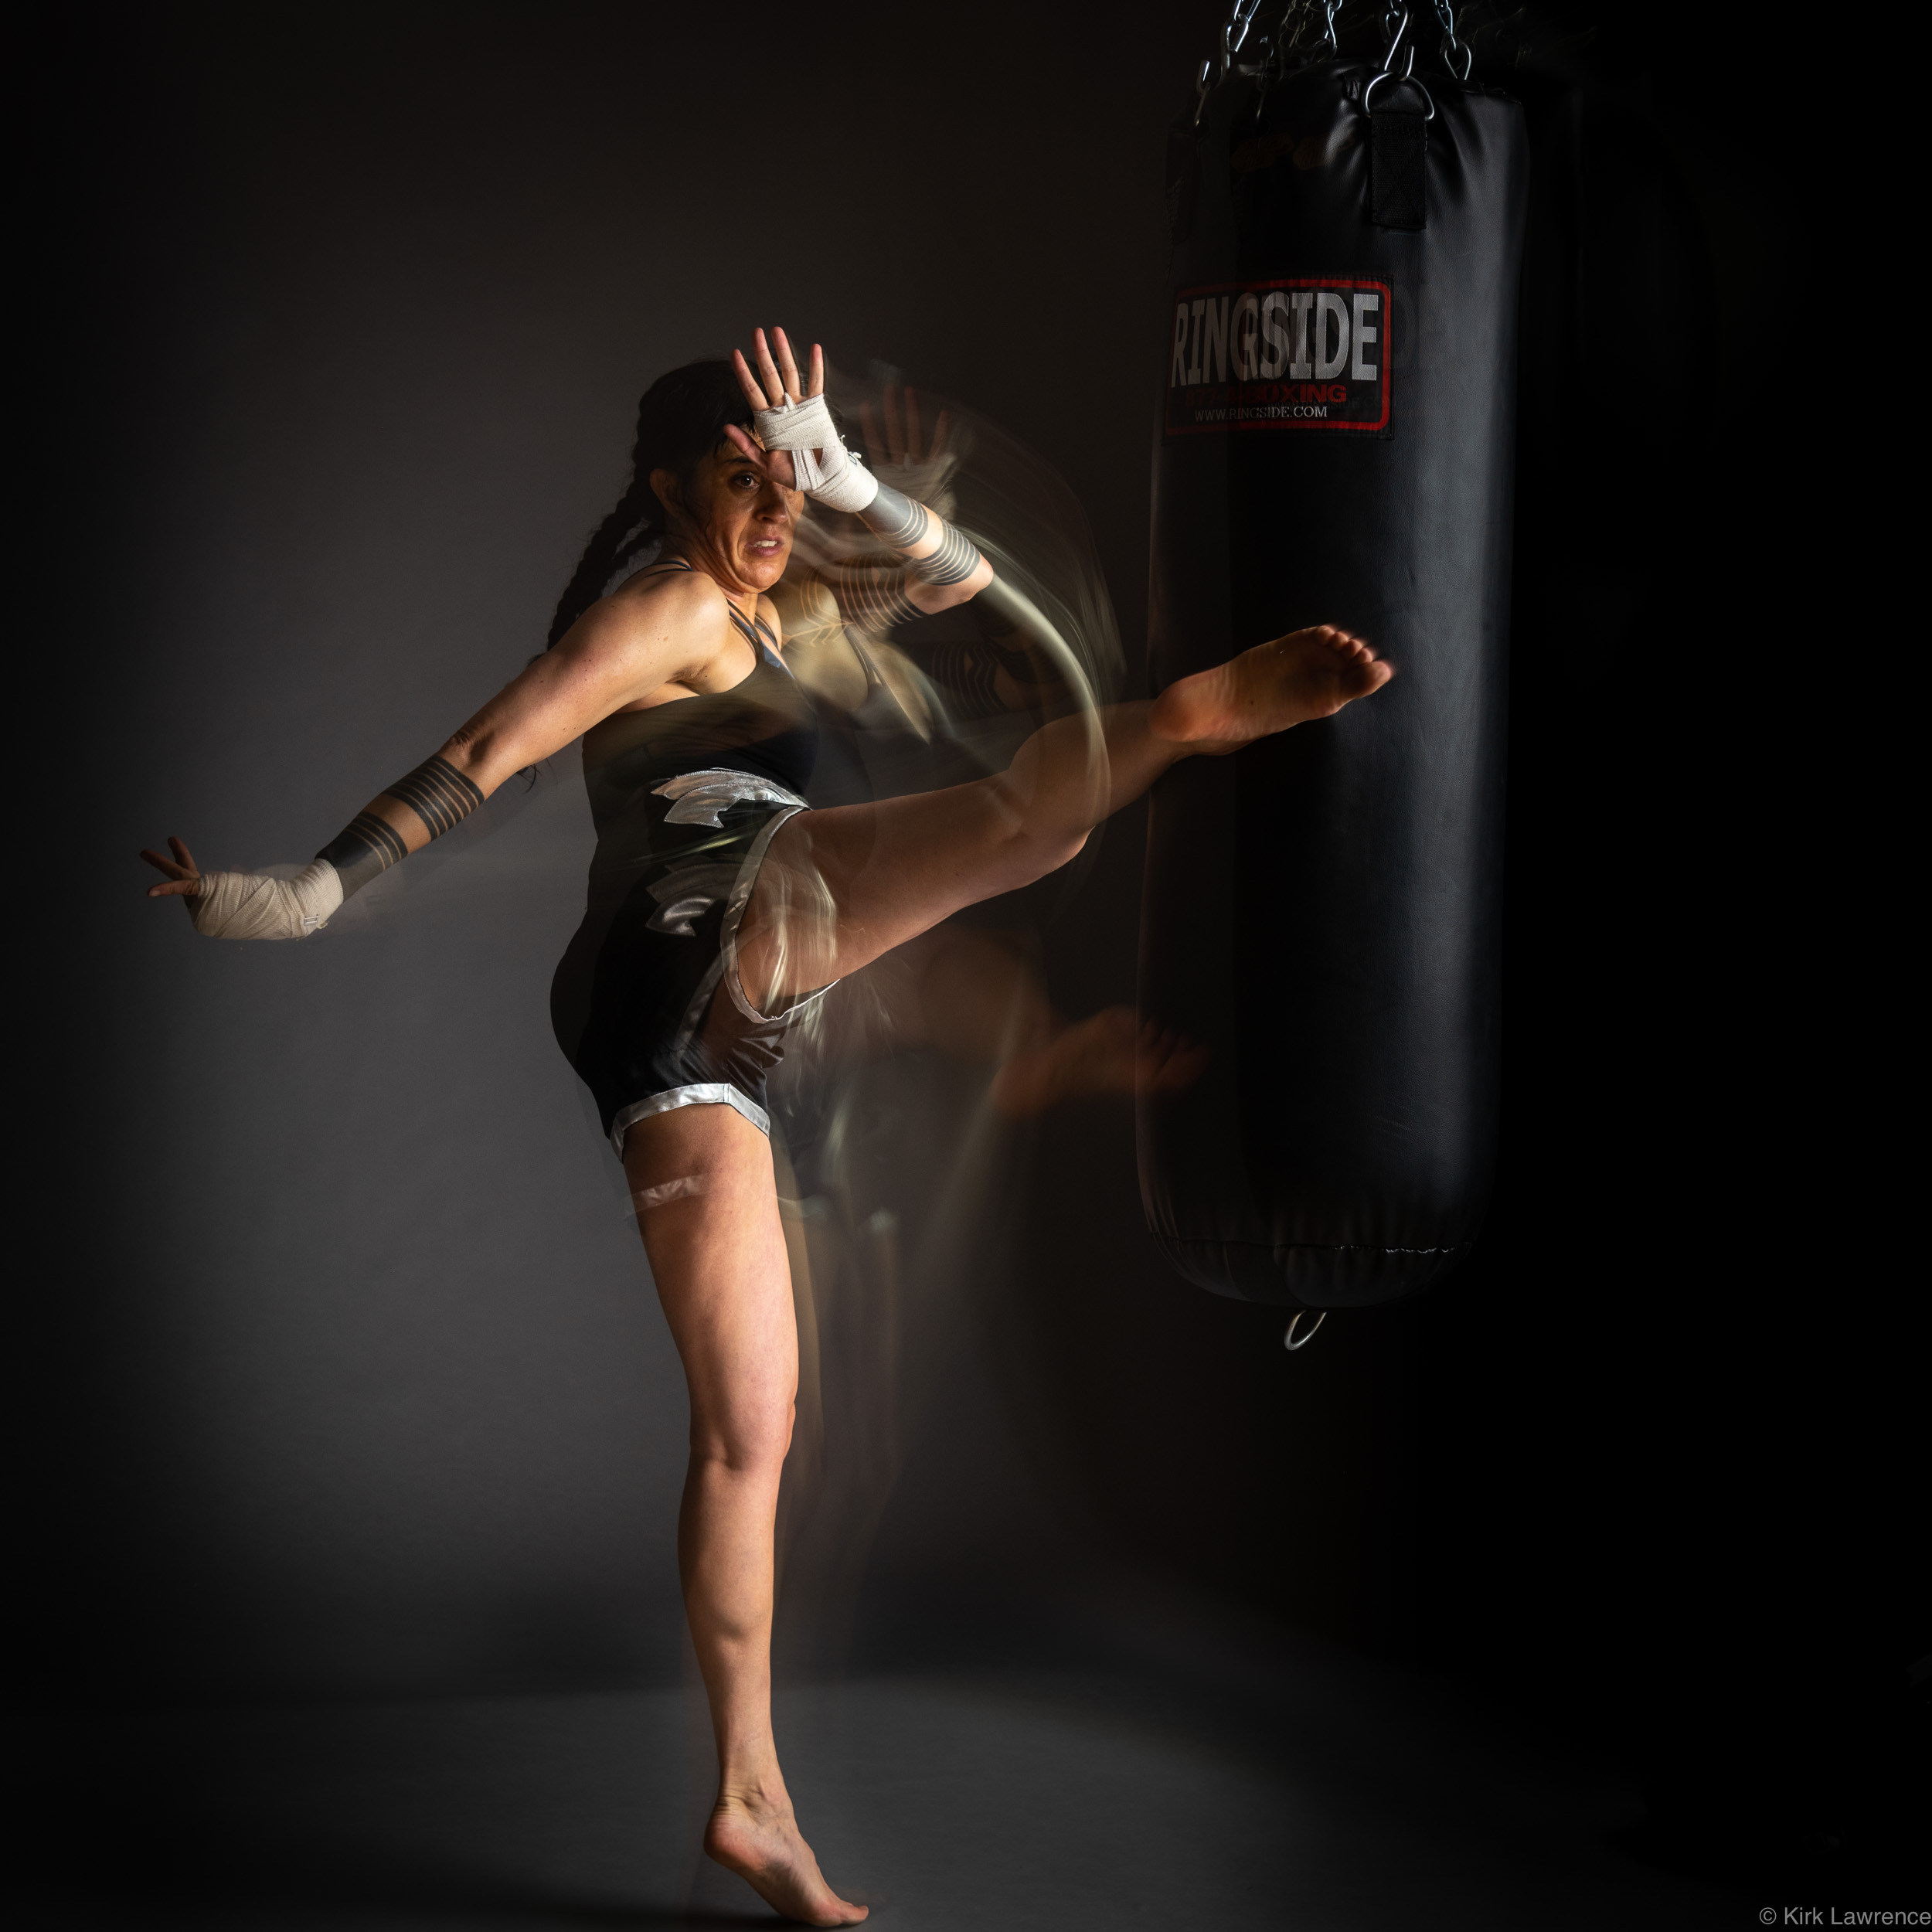 female_kickboxer_kicking_bag.jpg